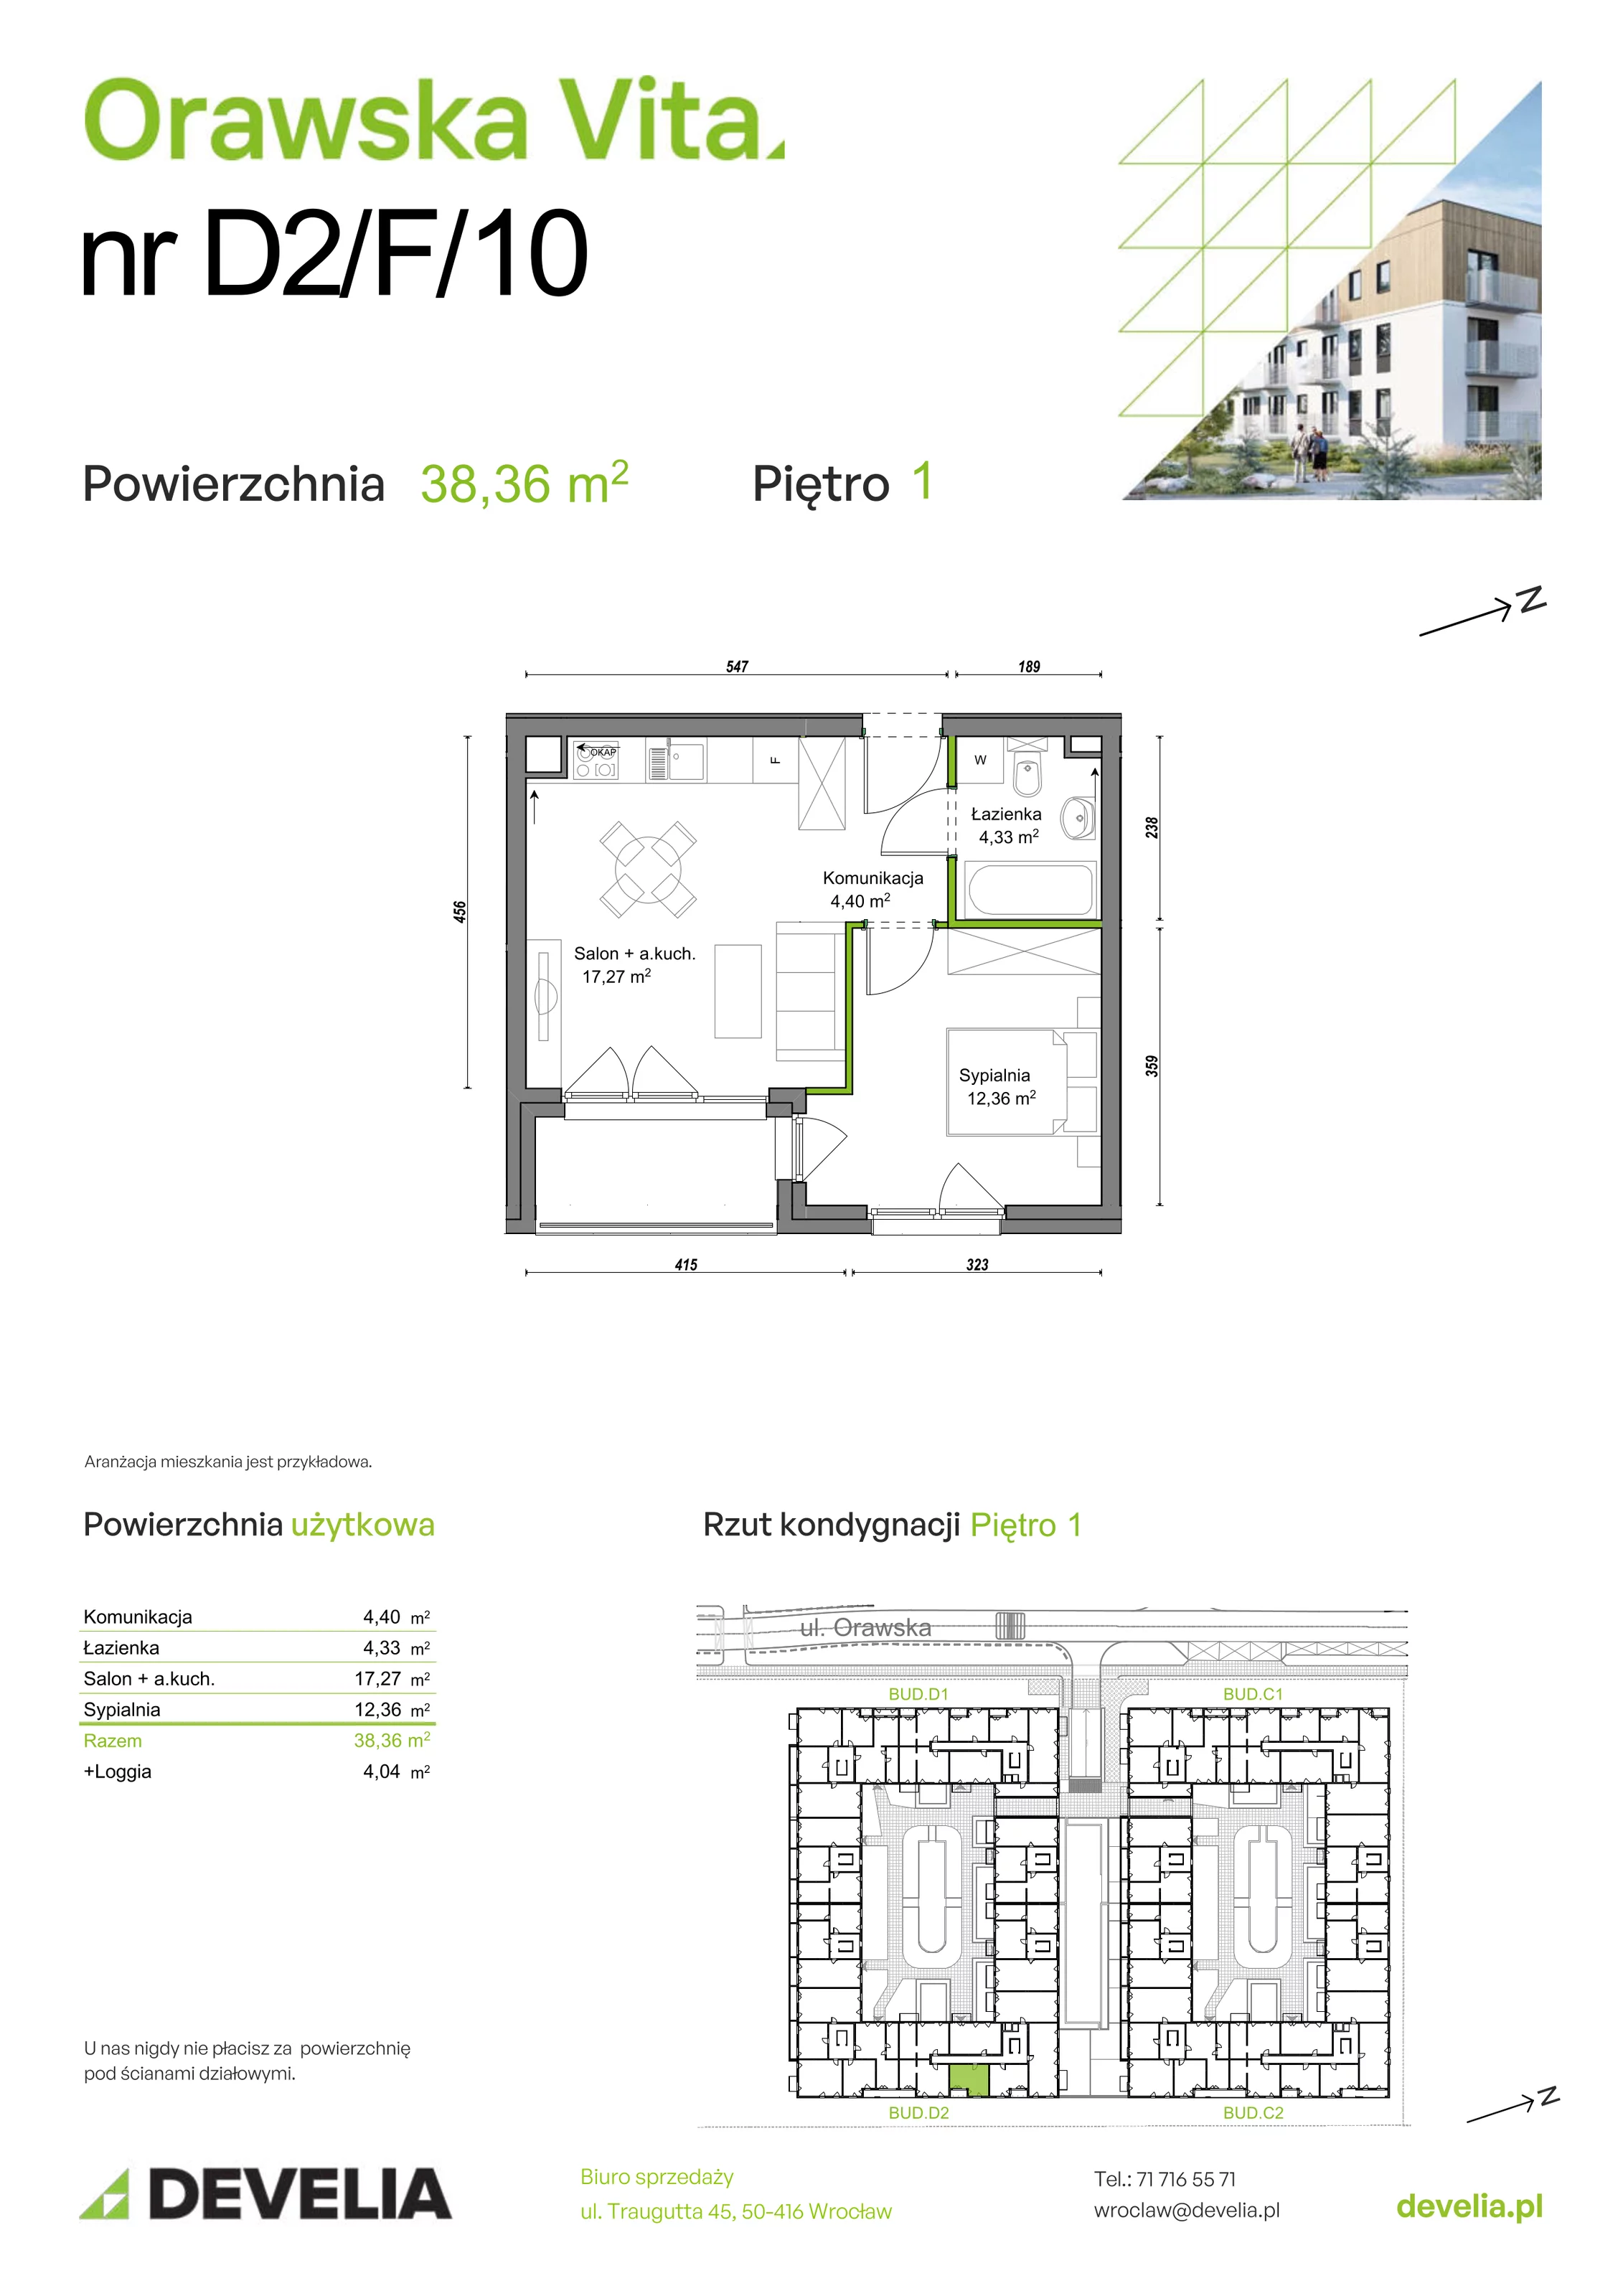 Mieszkanie 38,36 m², piętro 1, oferta nr D2/F/10, Orawska Vita, Wrocław, Ołtaszyn, Krzyki, ul. Orawska 73